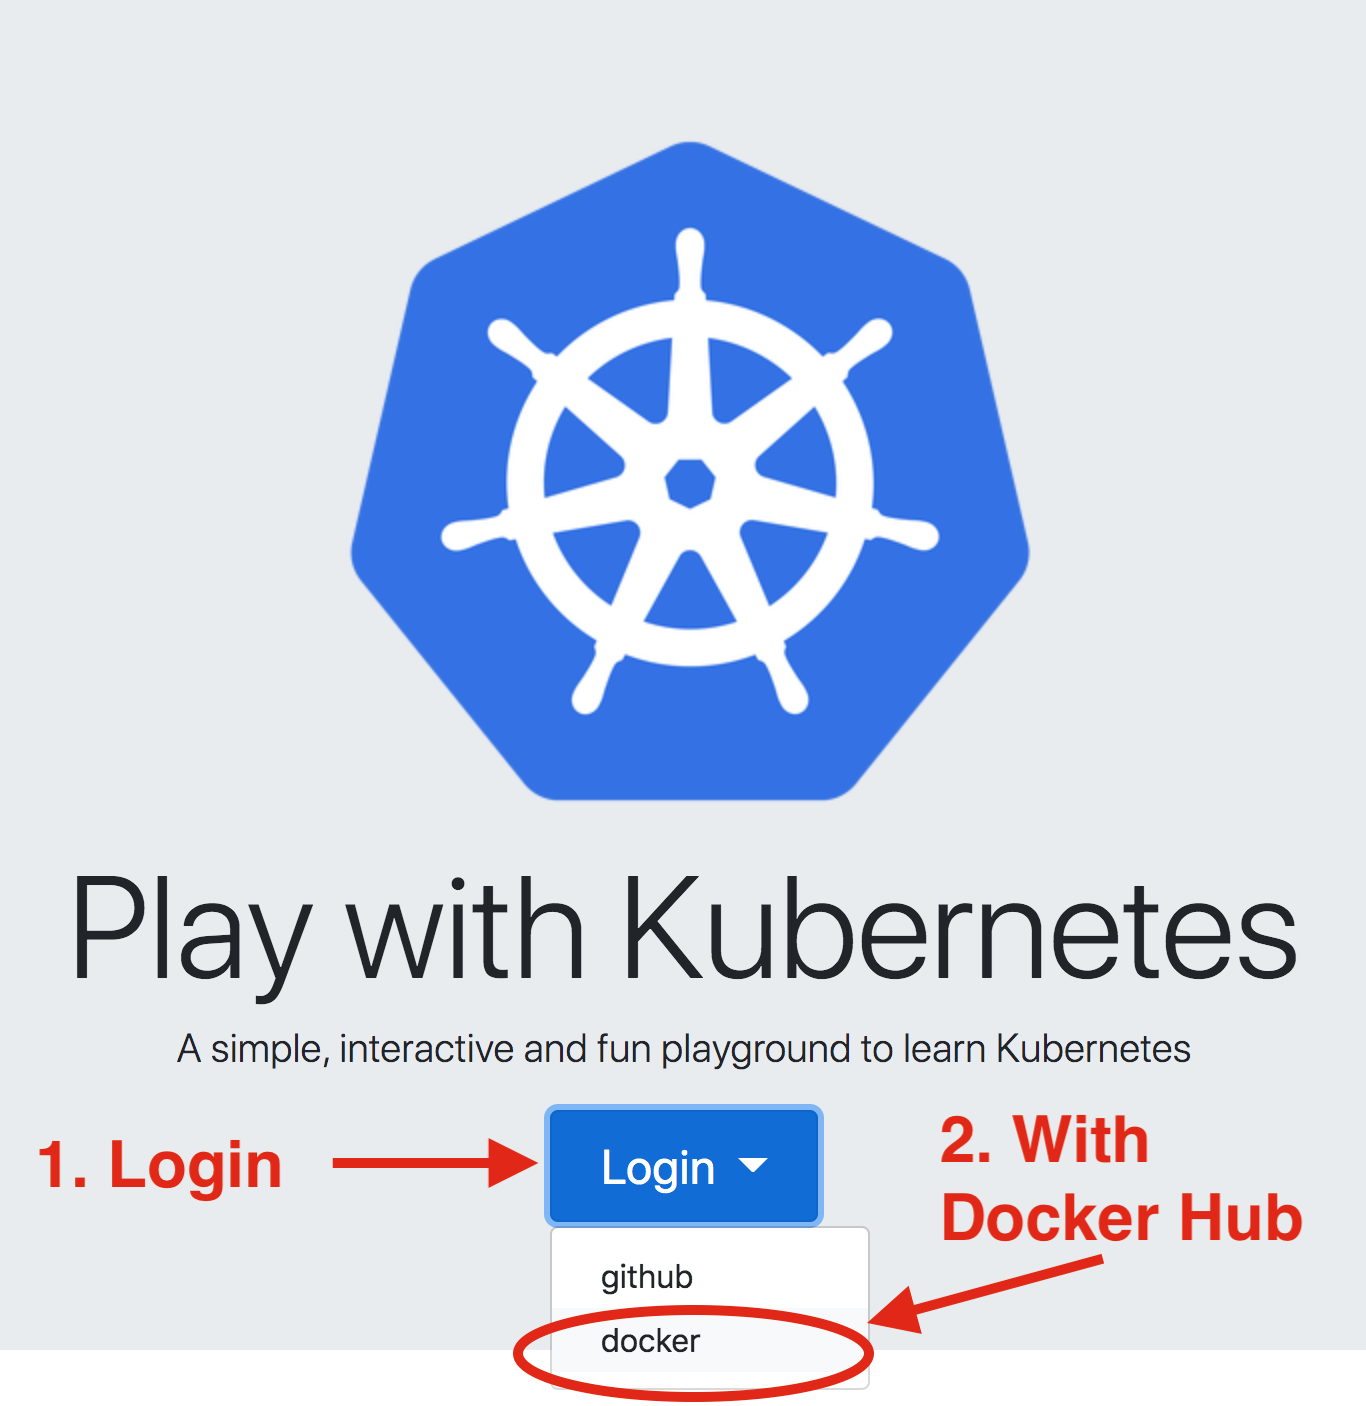 Log in with Docker Hub